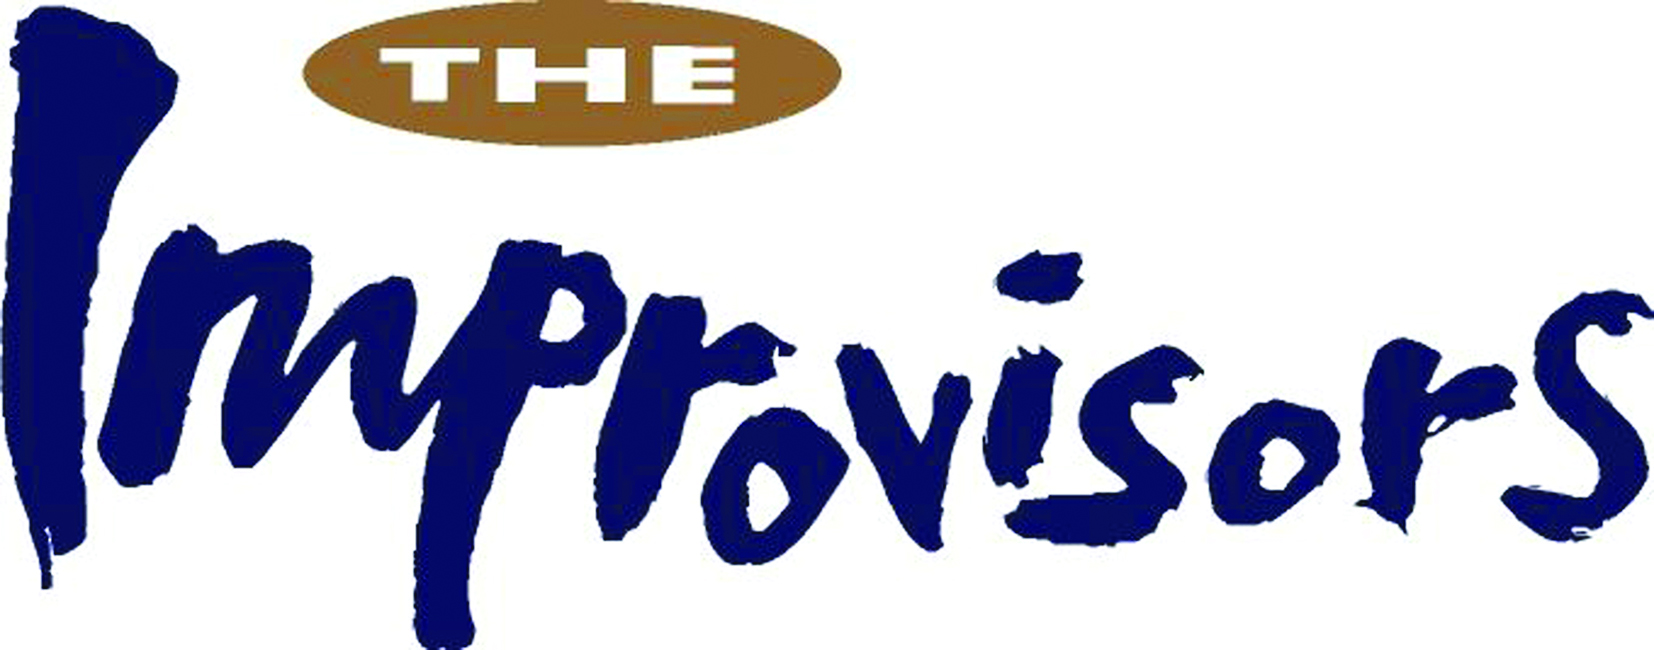 improvisors-logo